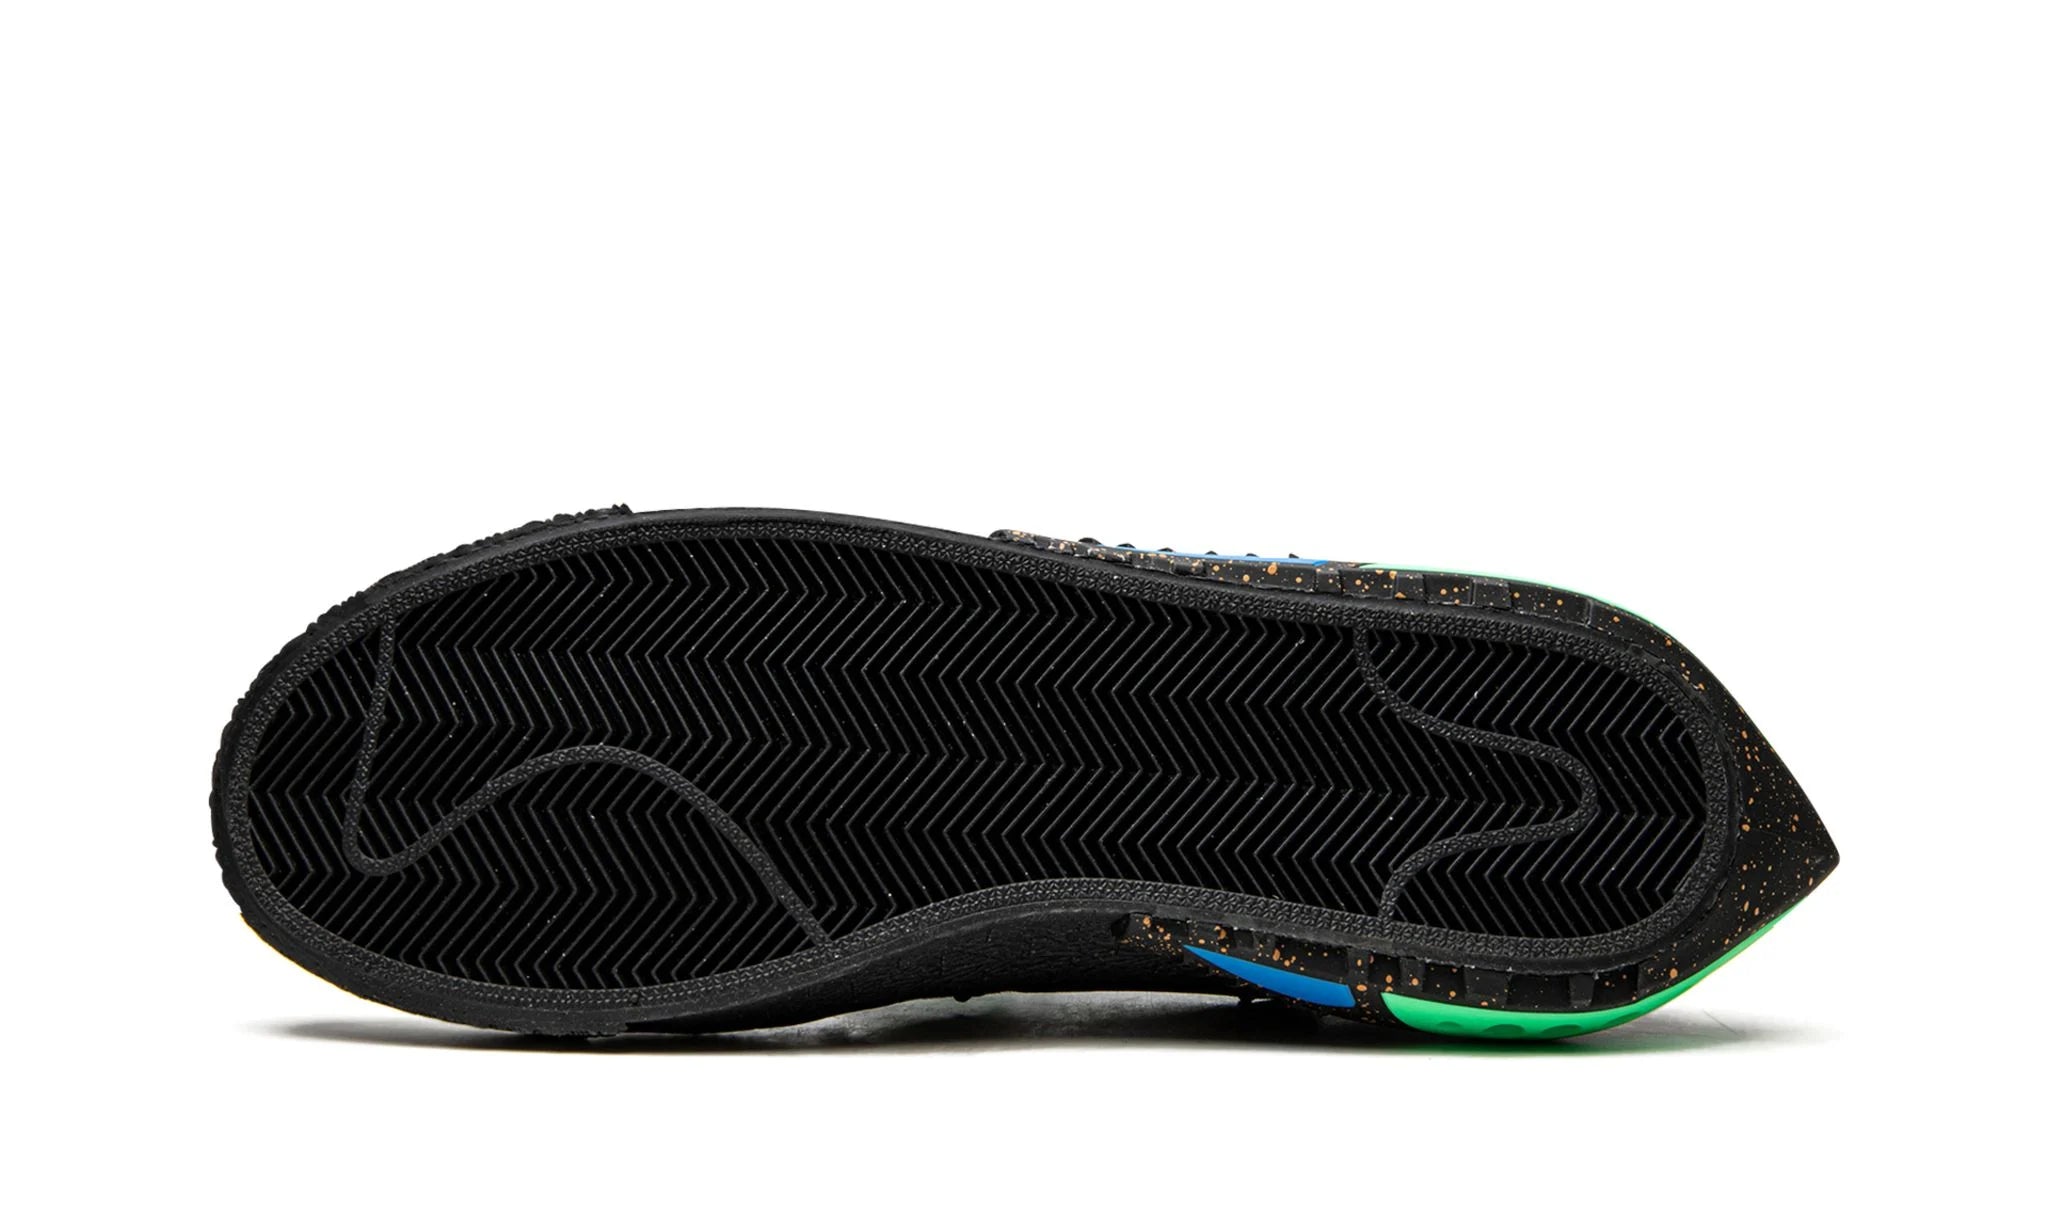 Nike Blazer Low Off-White Black Electro Green - Dunk Low - Pirri